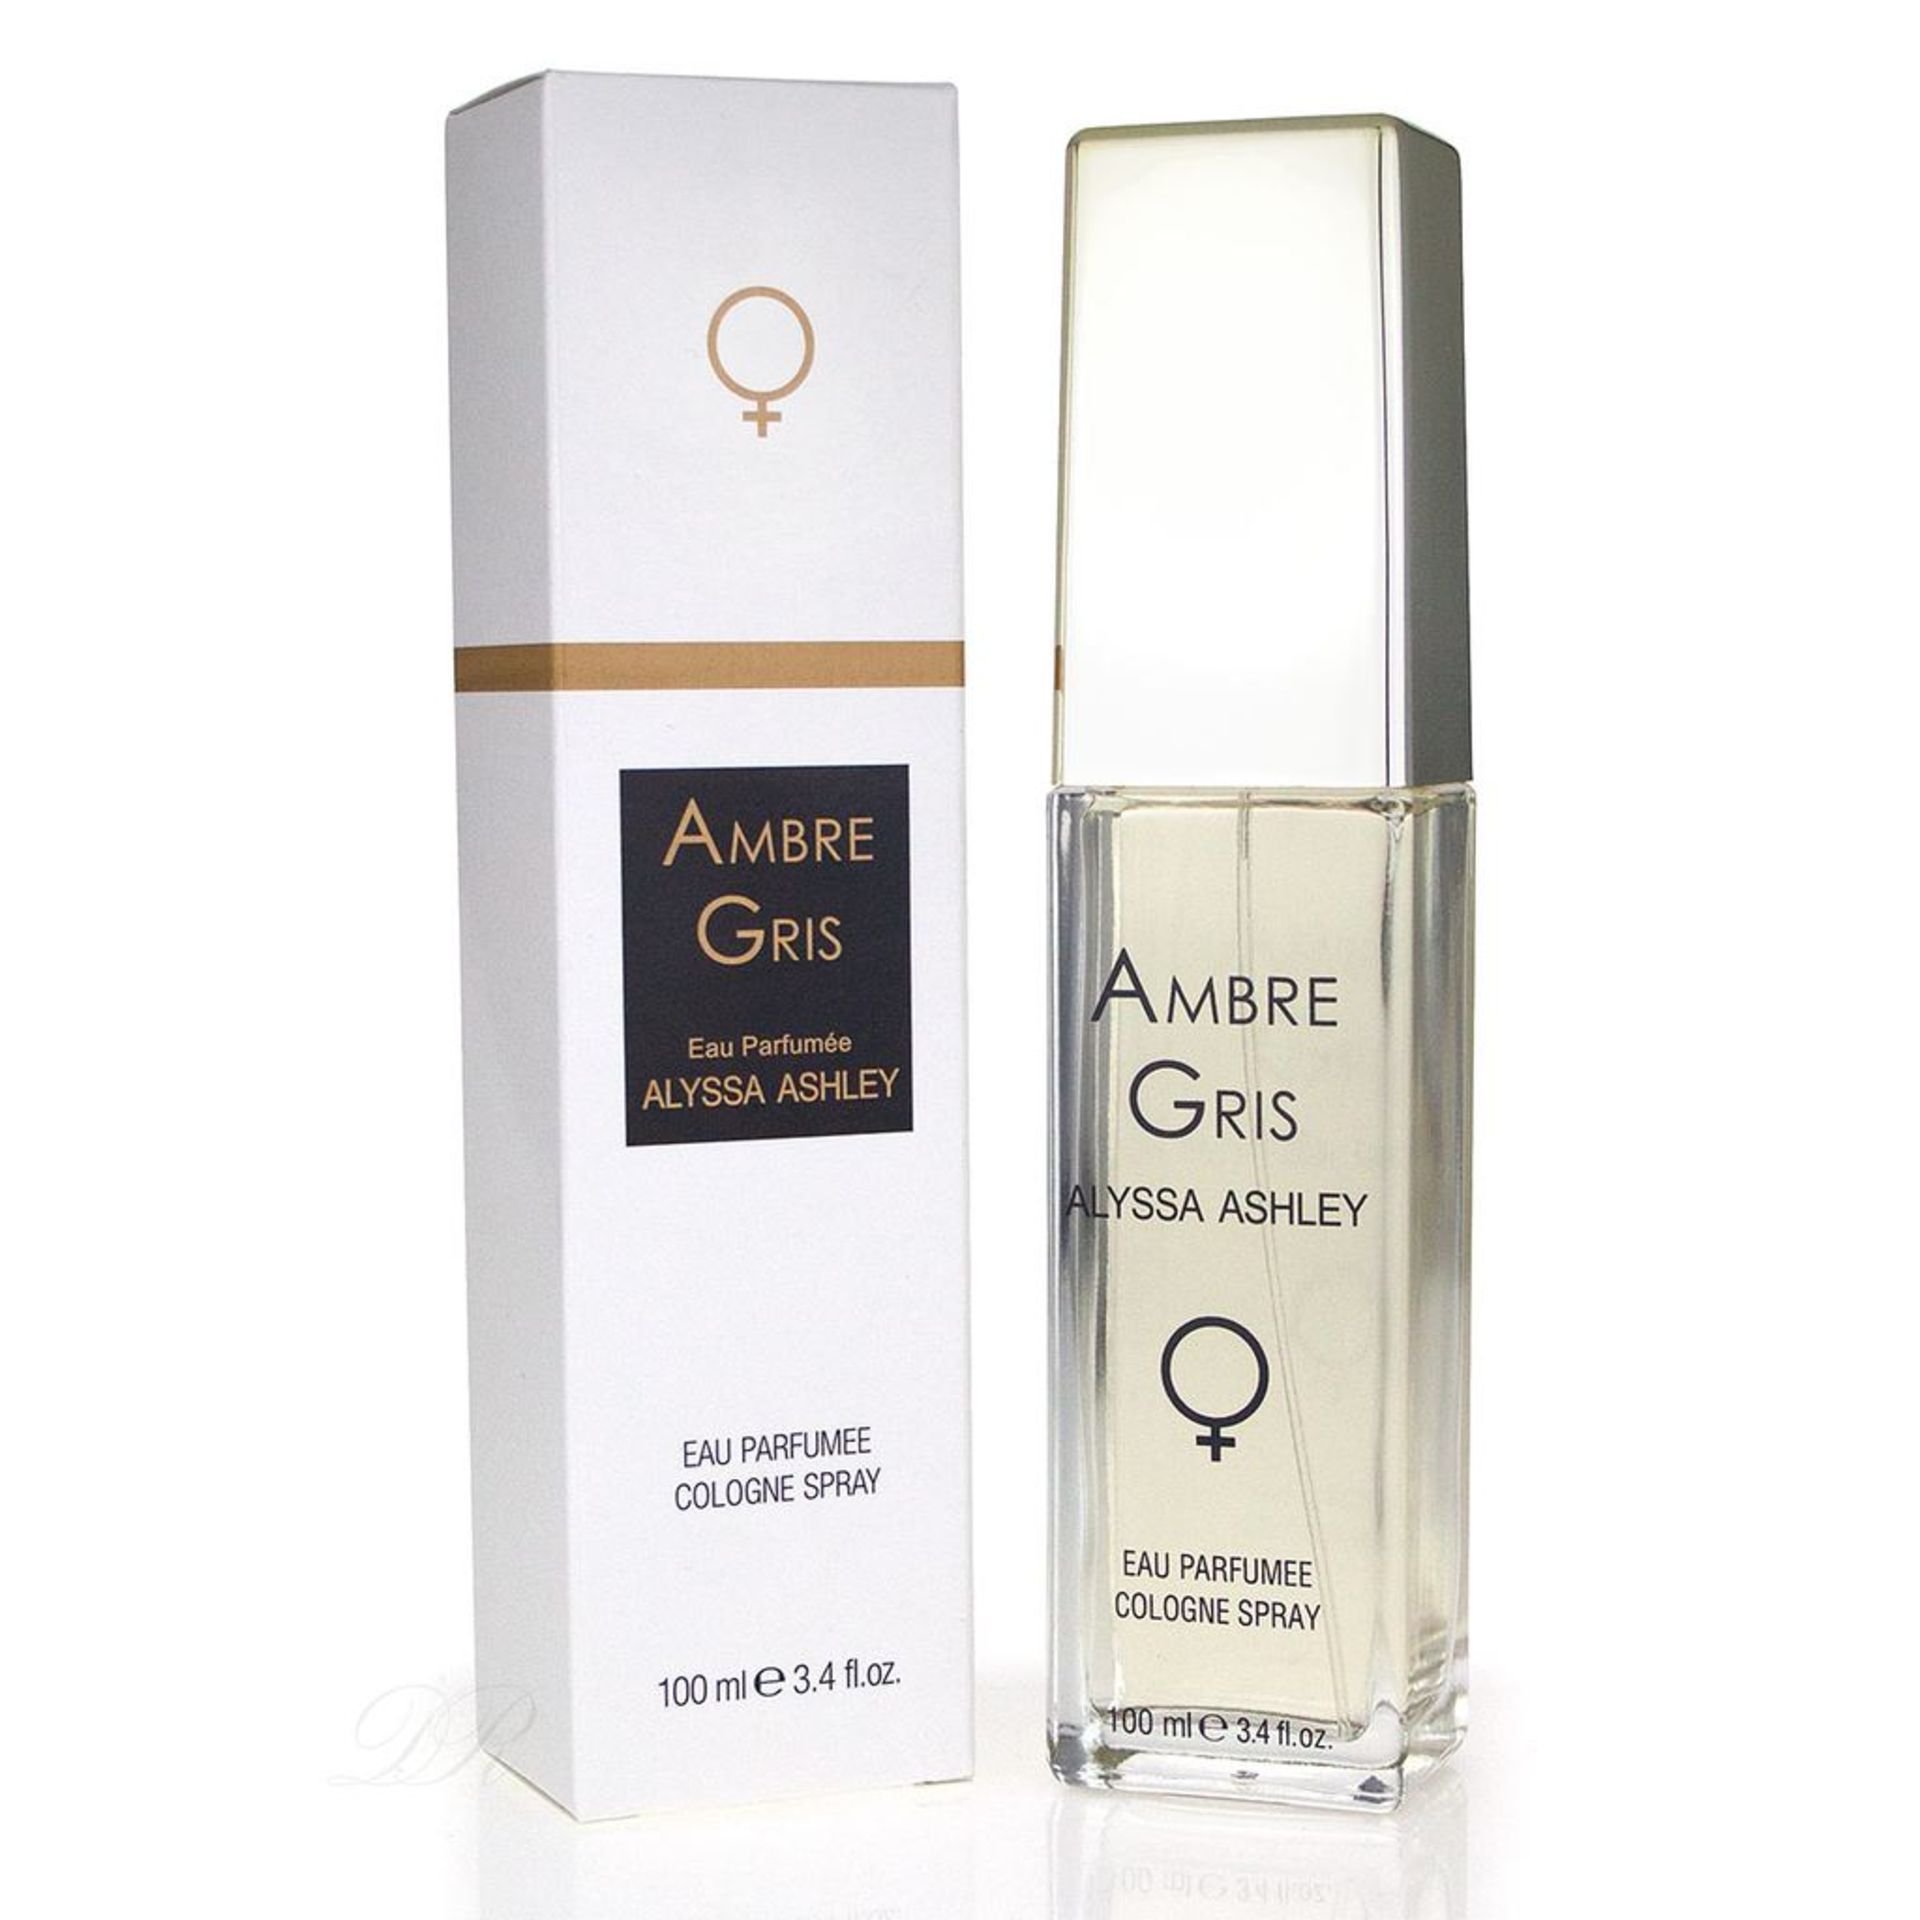 + VAT Brand New Alyssa Ashley Ambre Gris 100ml Eau Parfumee Cologne Spray